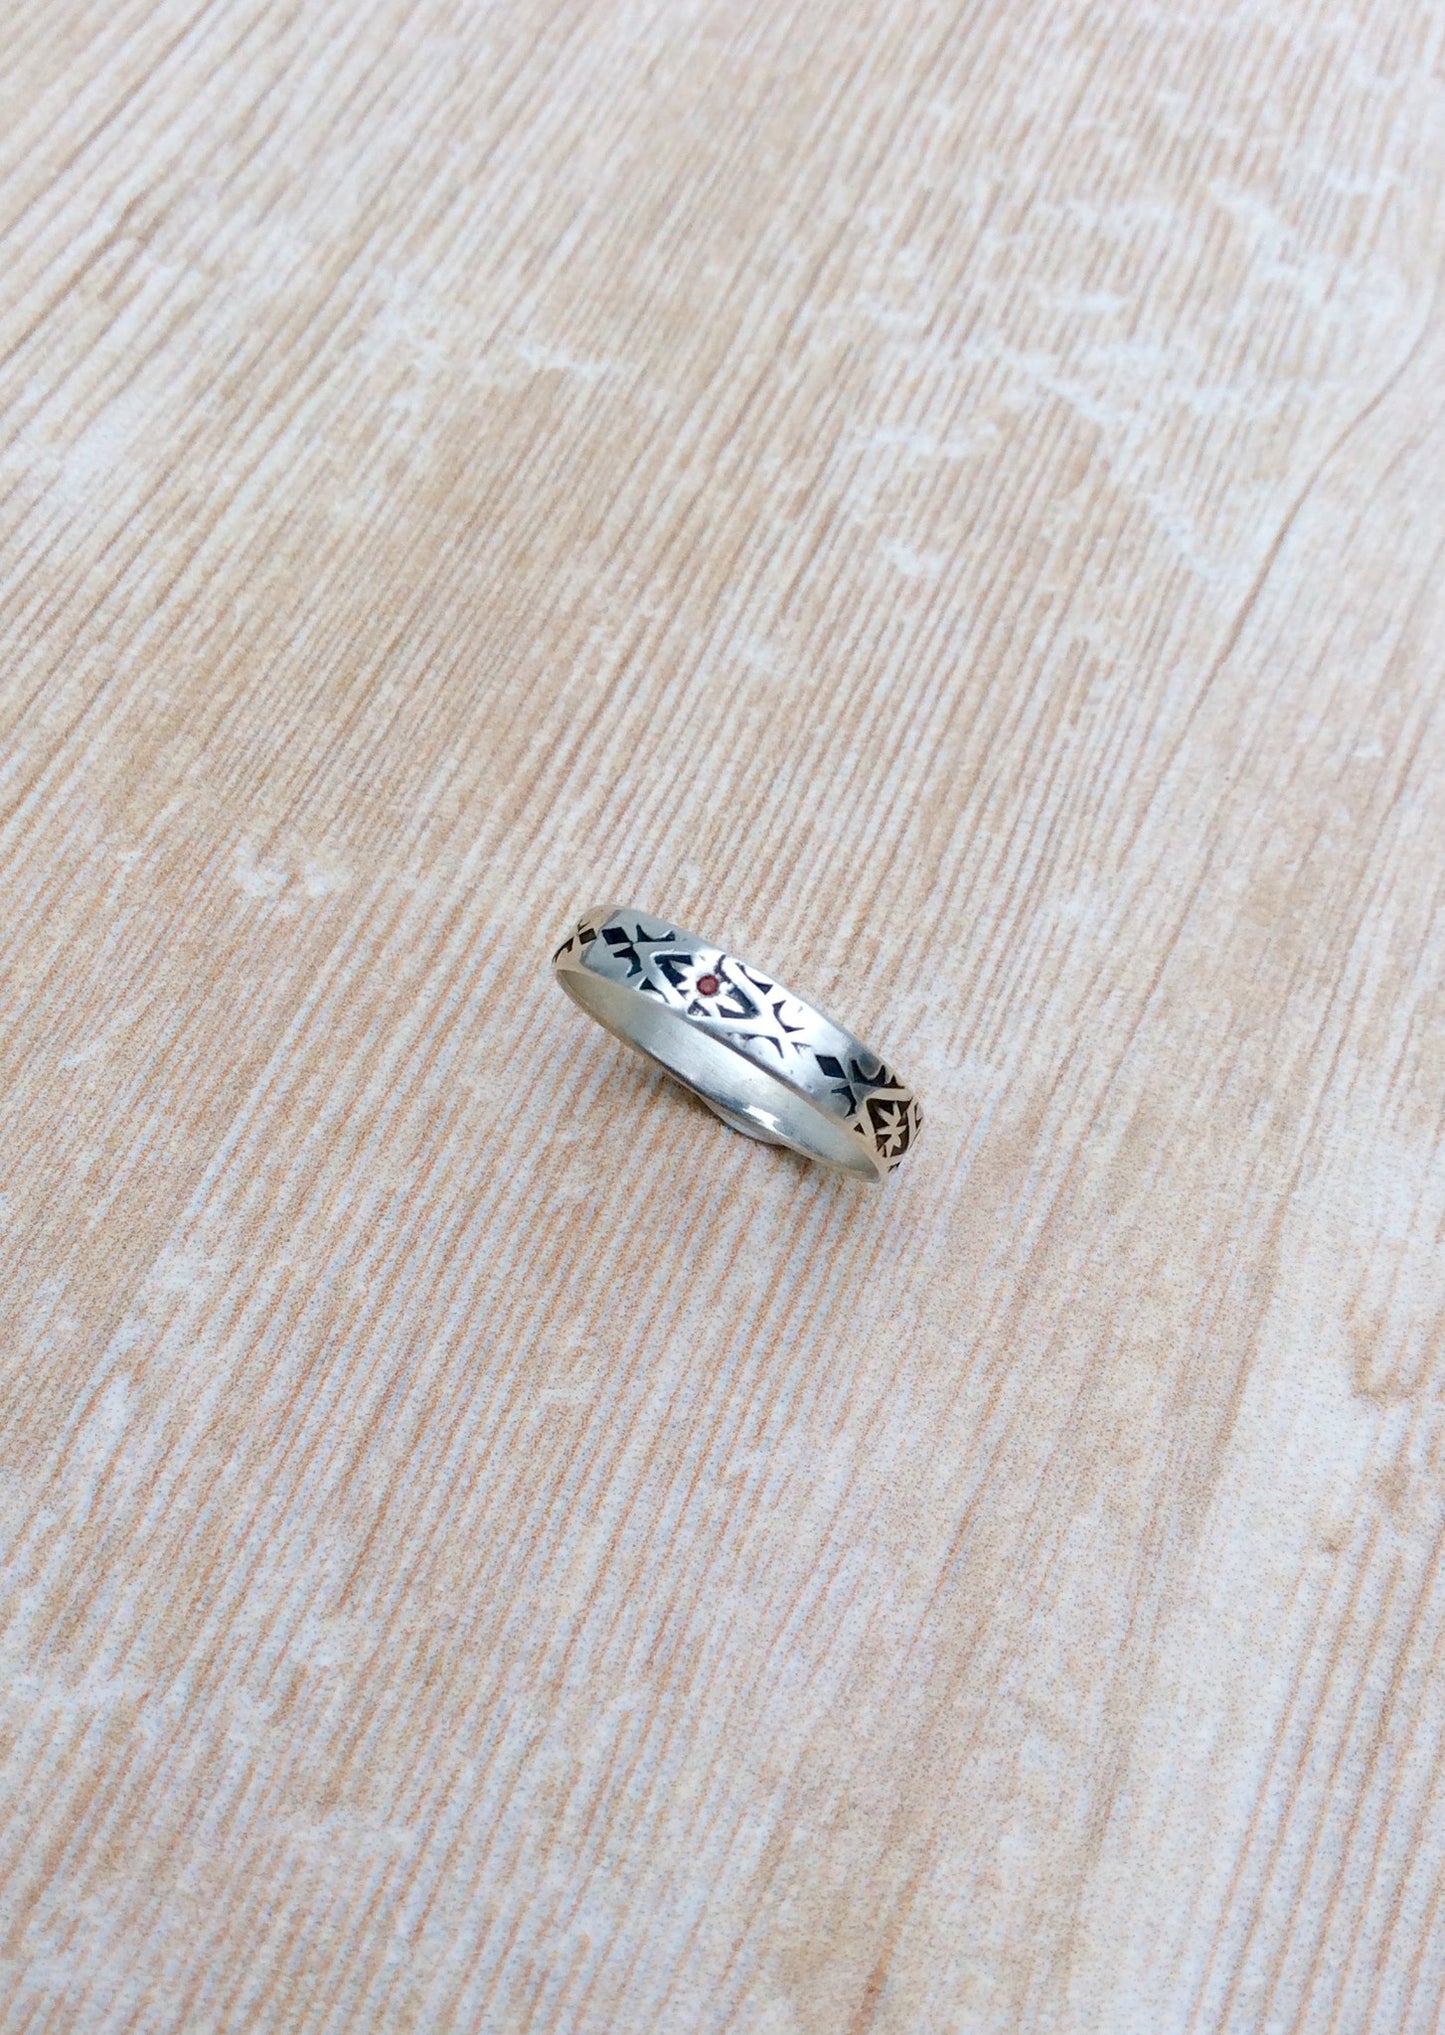 Aztec Stamped Flush-Set Garnet Ring